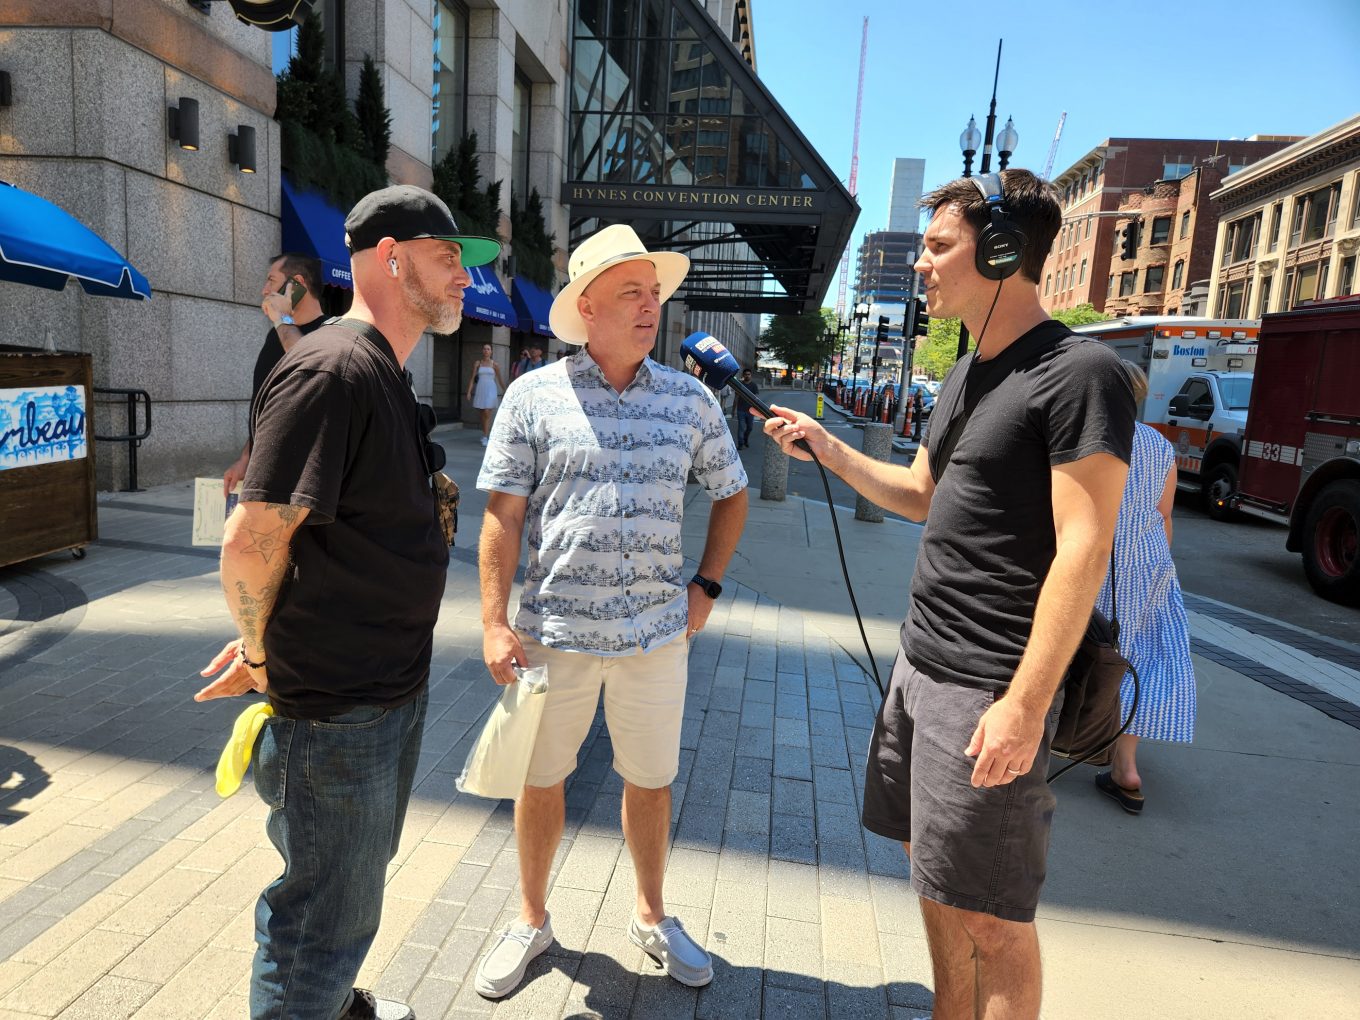 Matt Shearer interviews people on the street